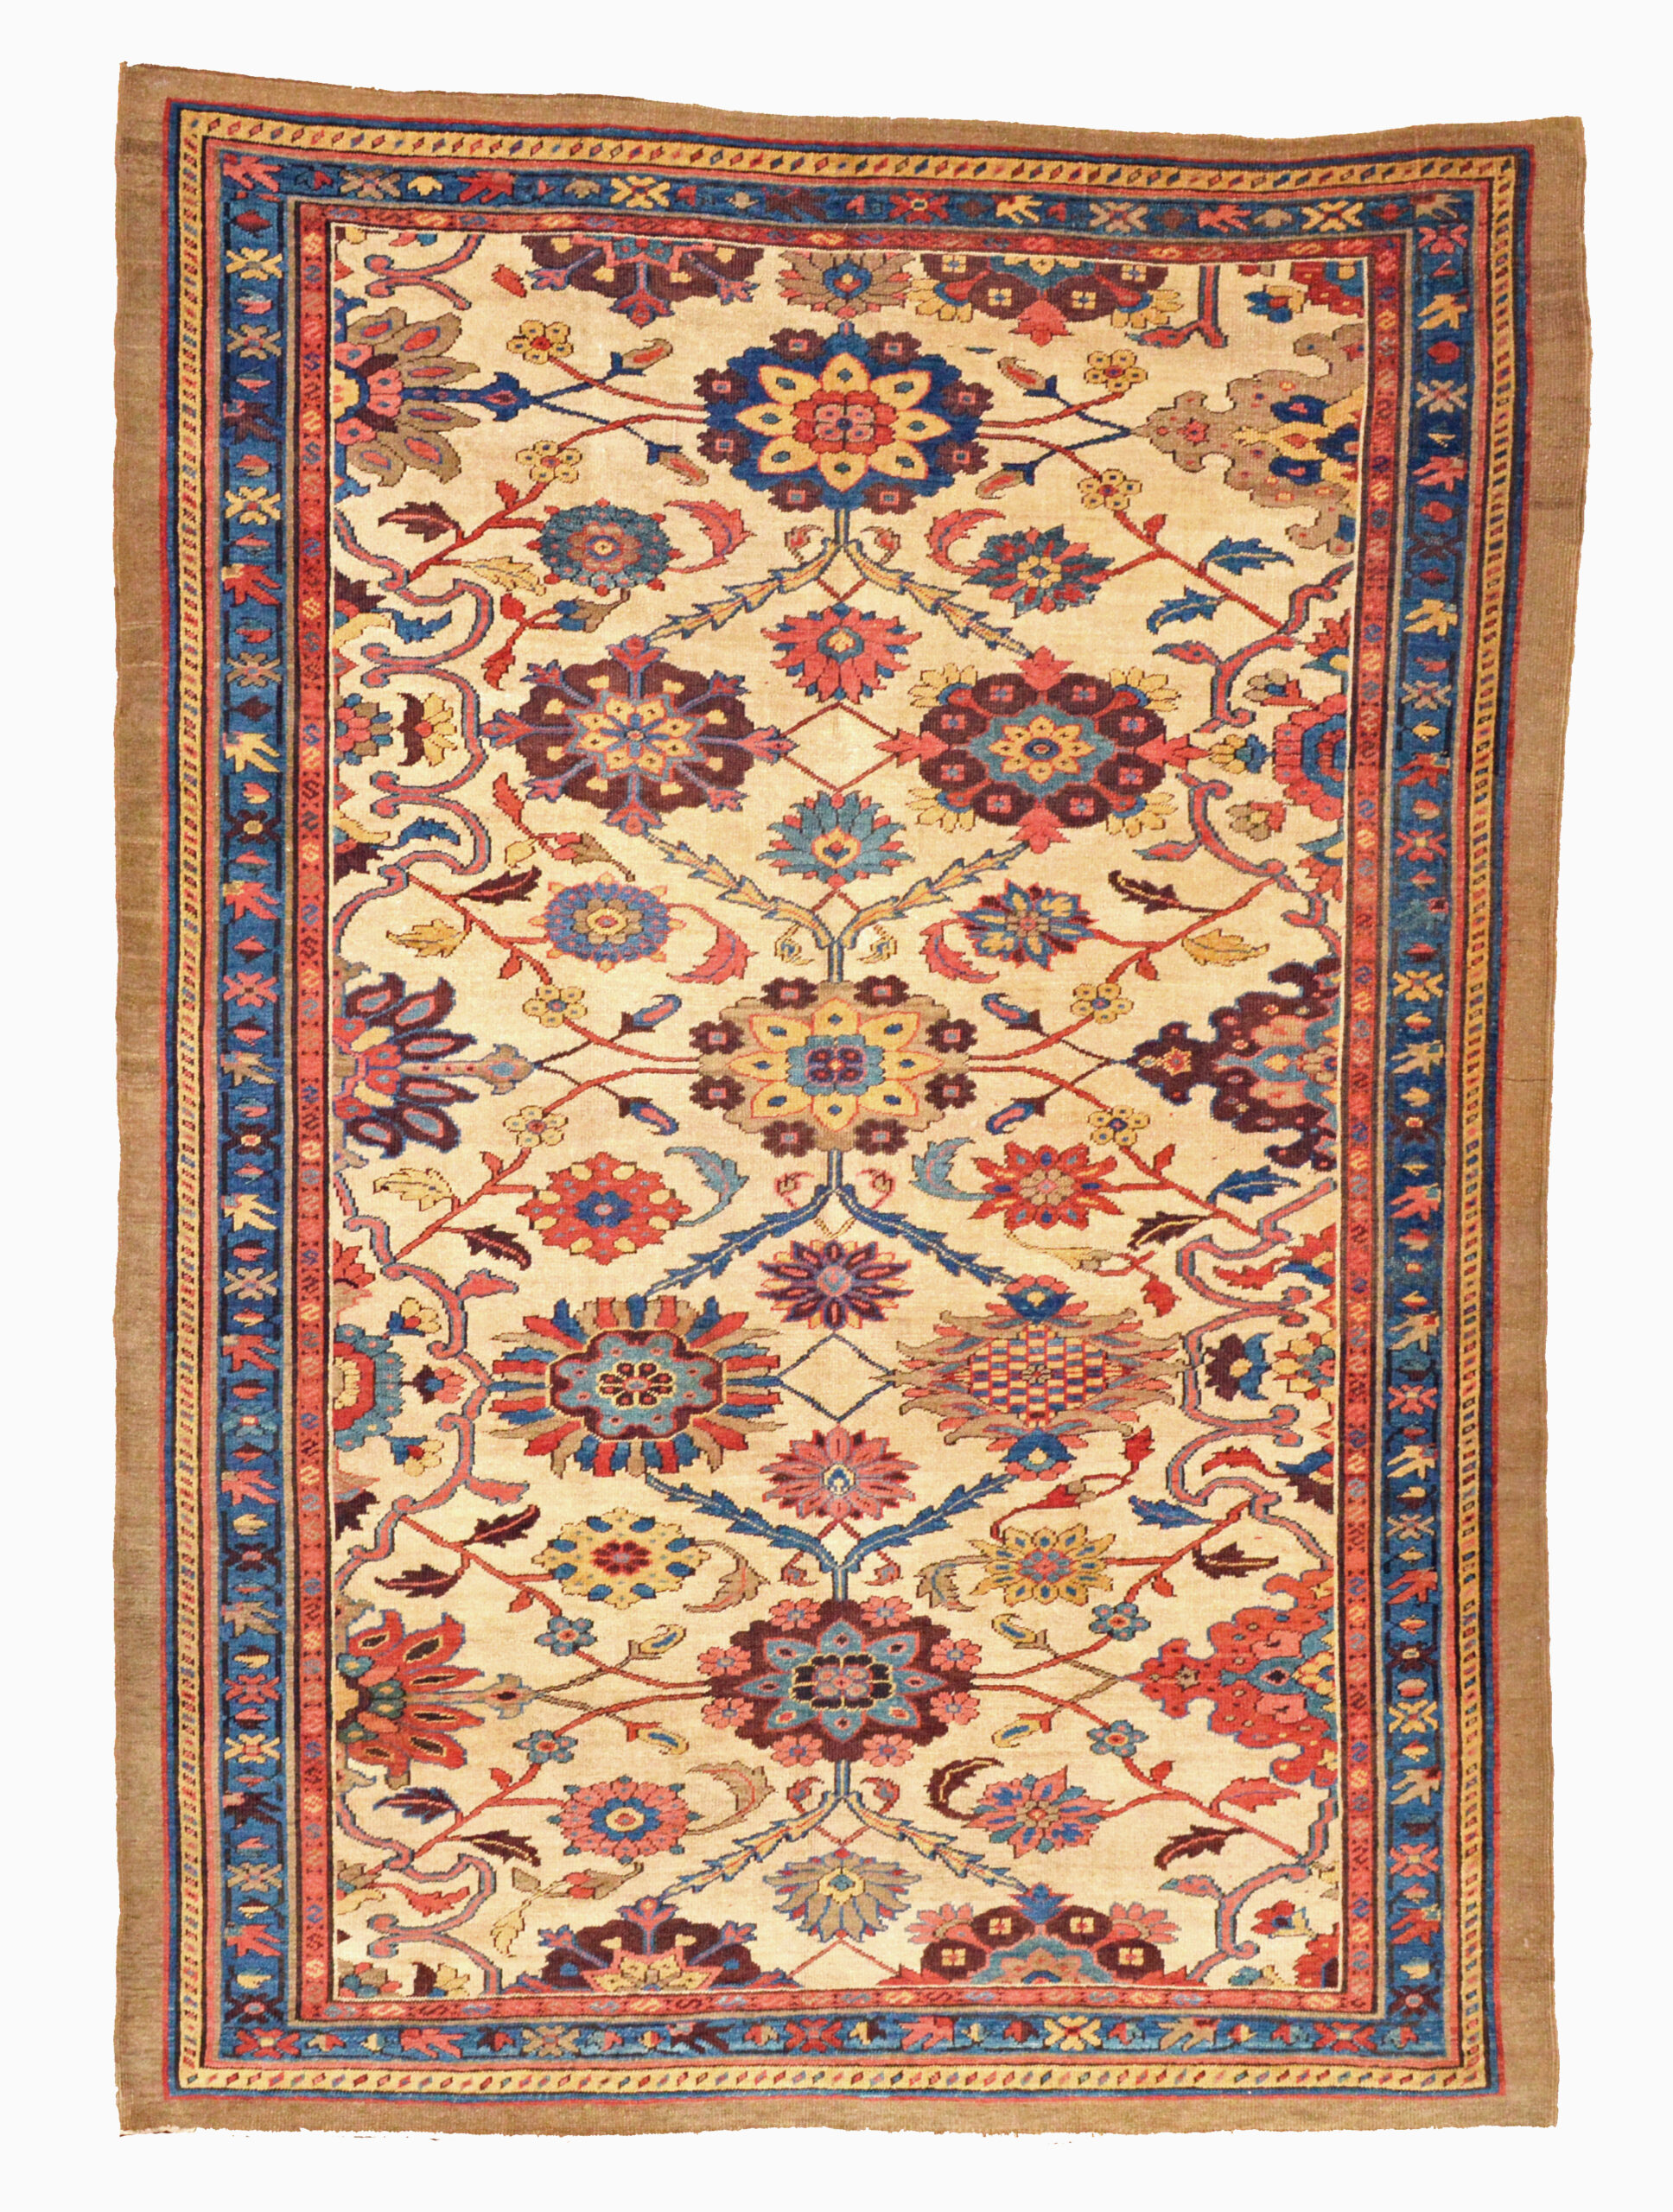 Antique northwest Persian Bakshaish rug from the Heriz area